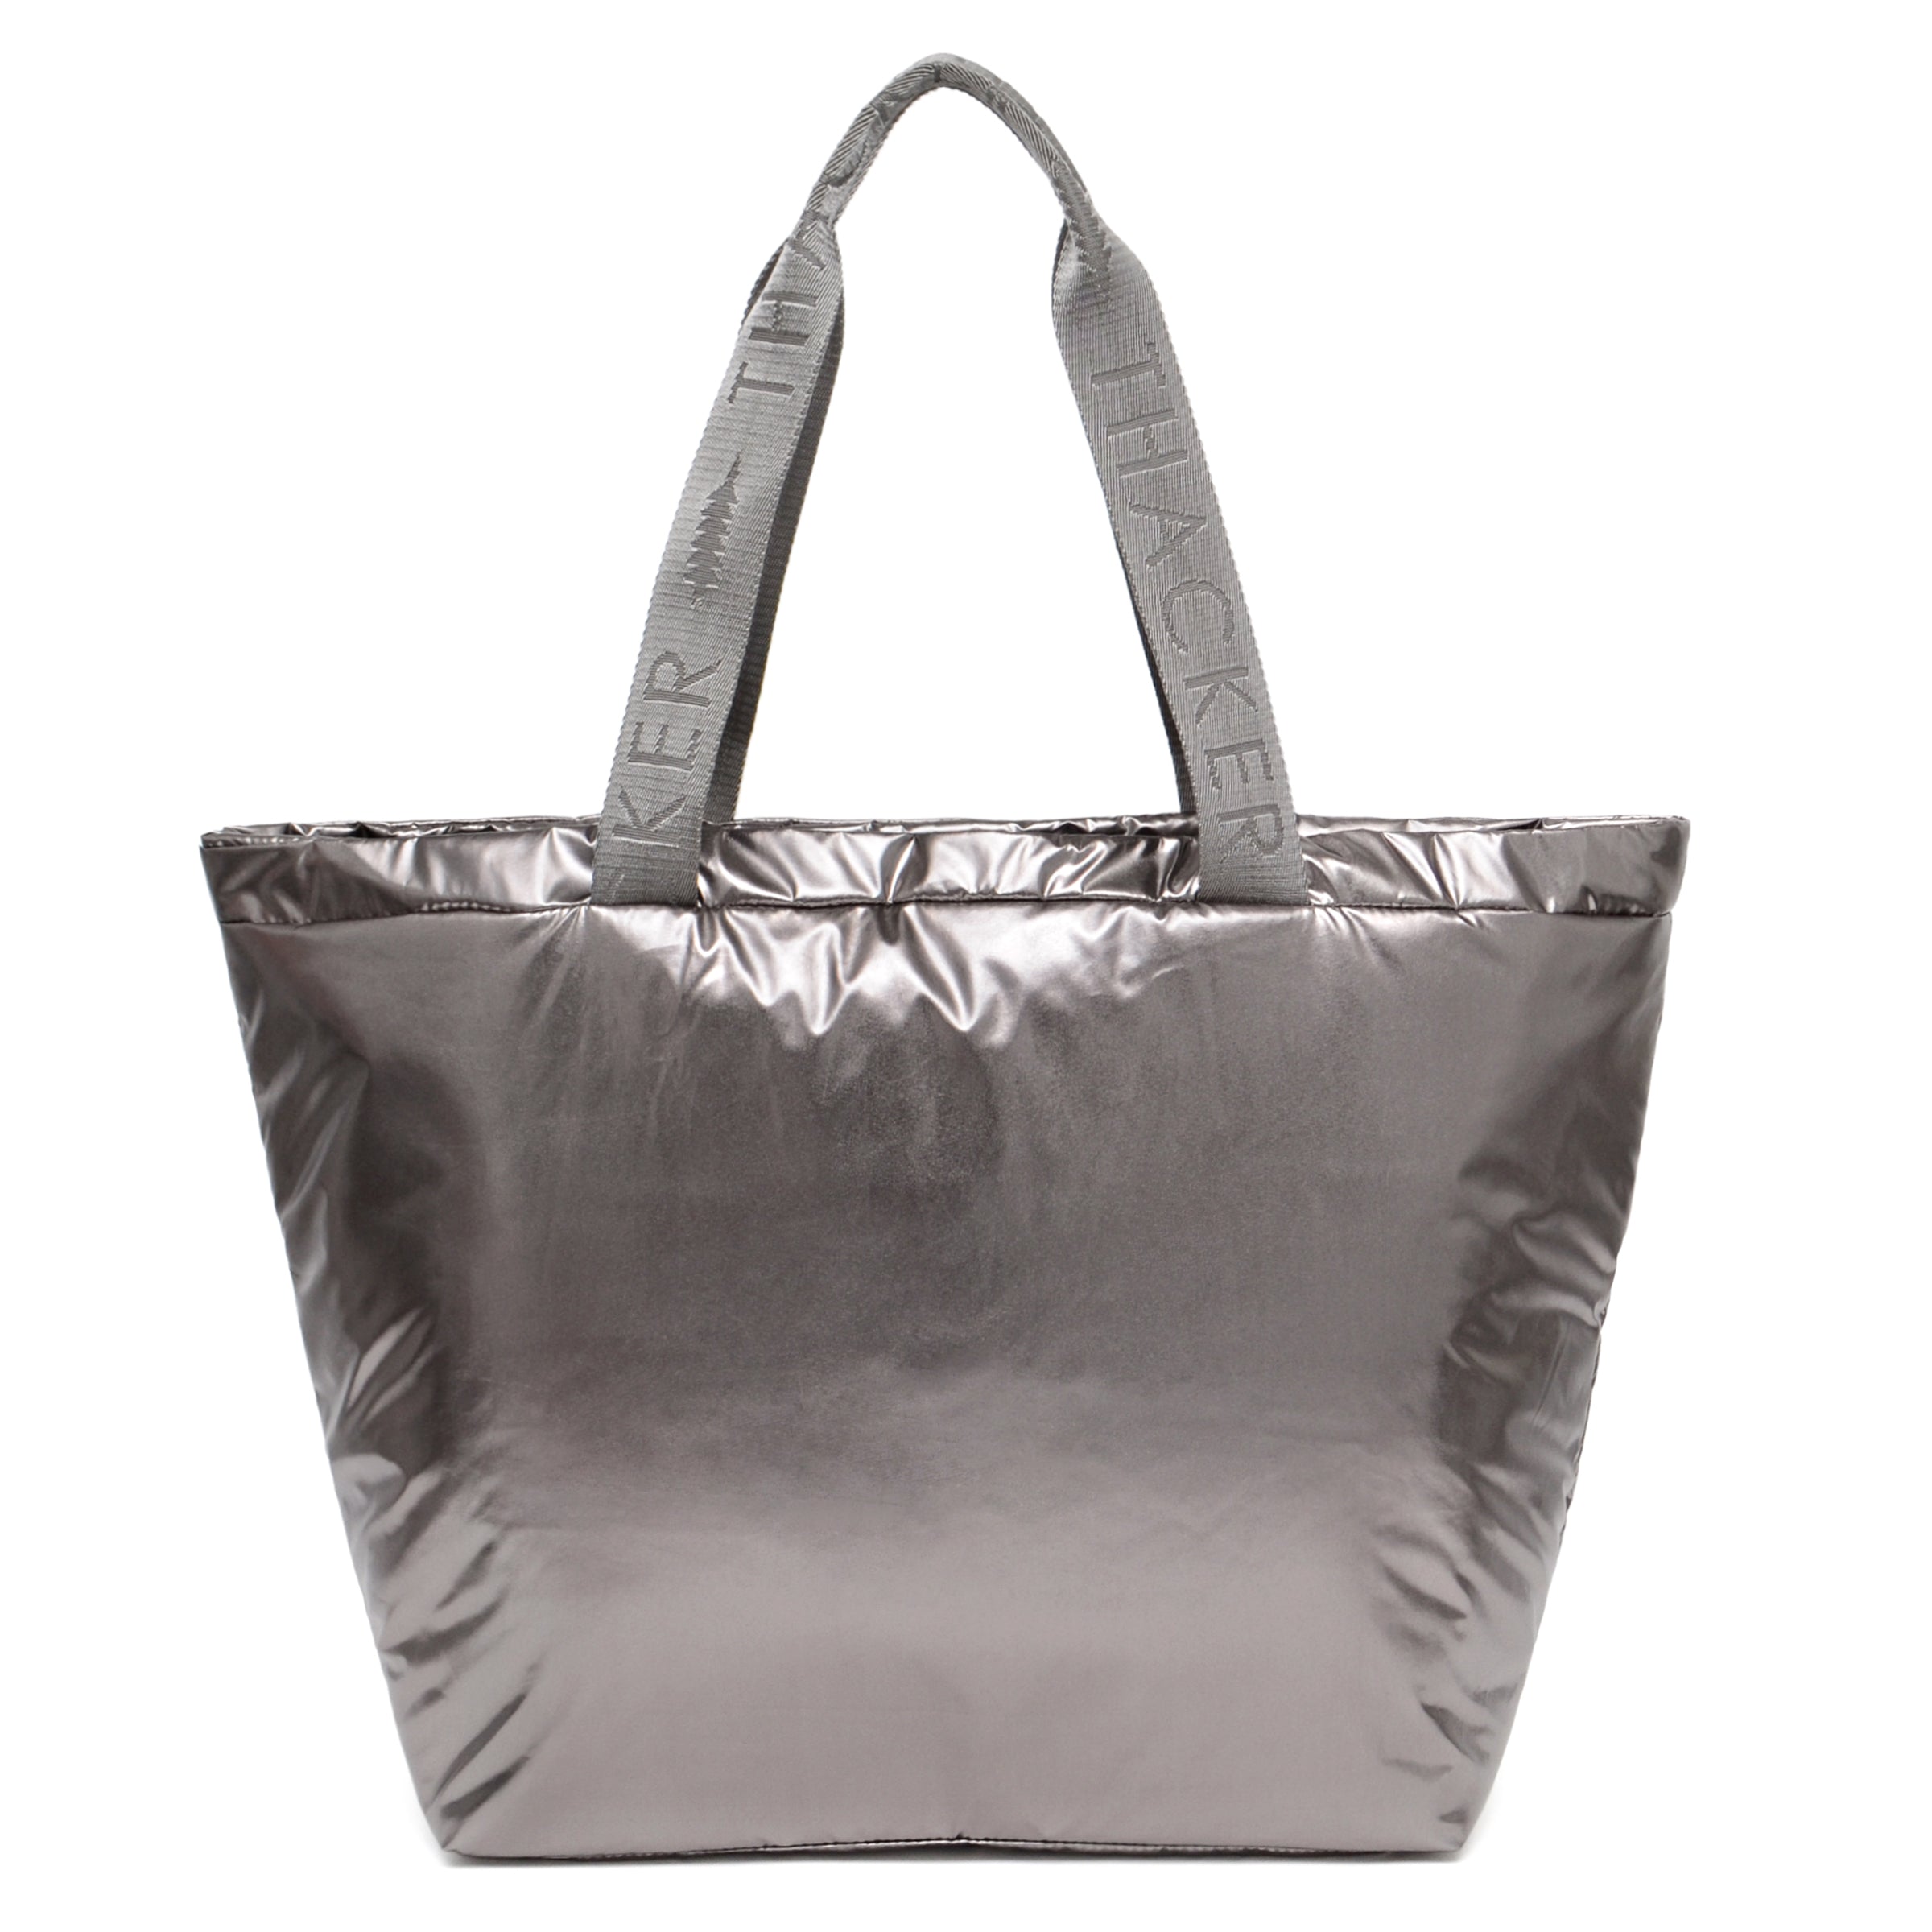 Metallic silver oversized leather bag, Large shopper carryall